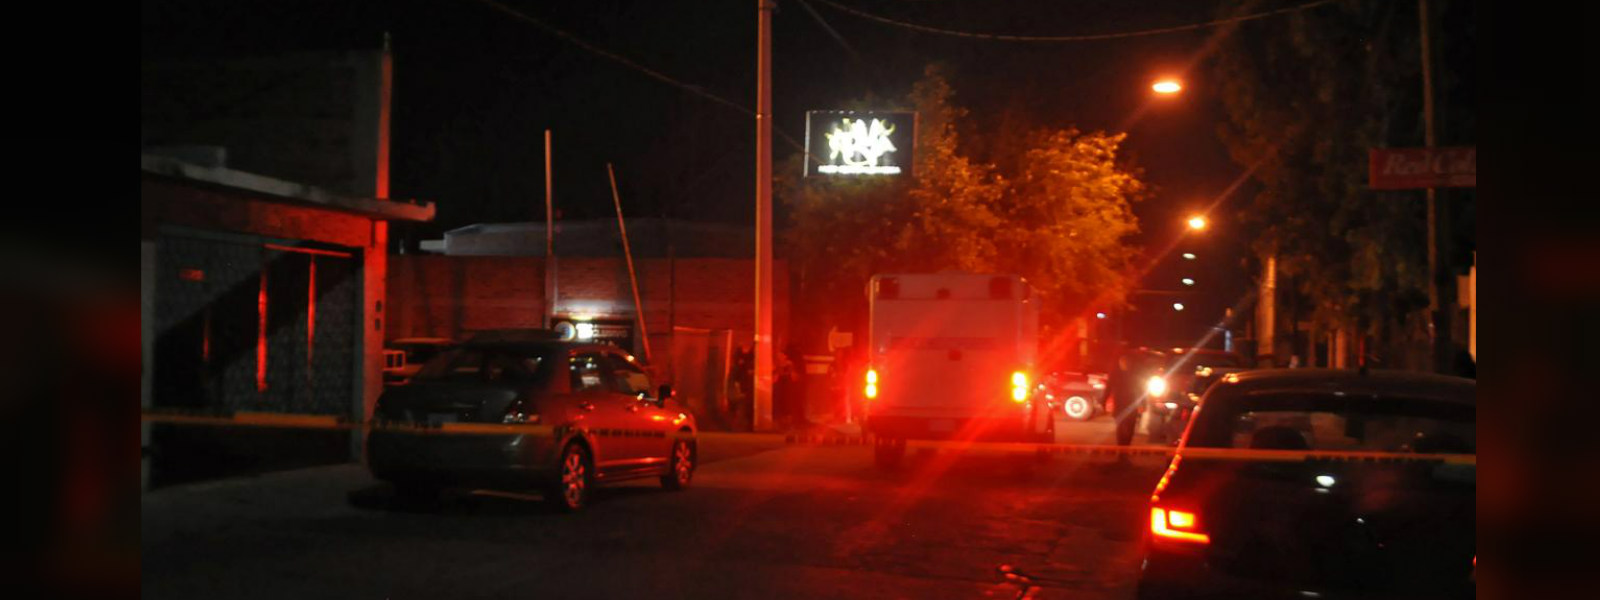 Night Club shooting in Mexico; 15 killed 